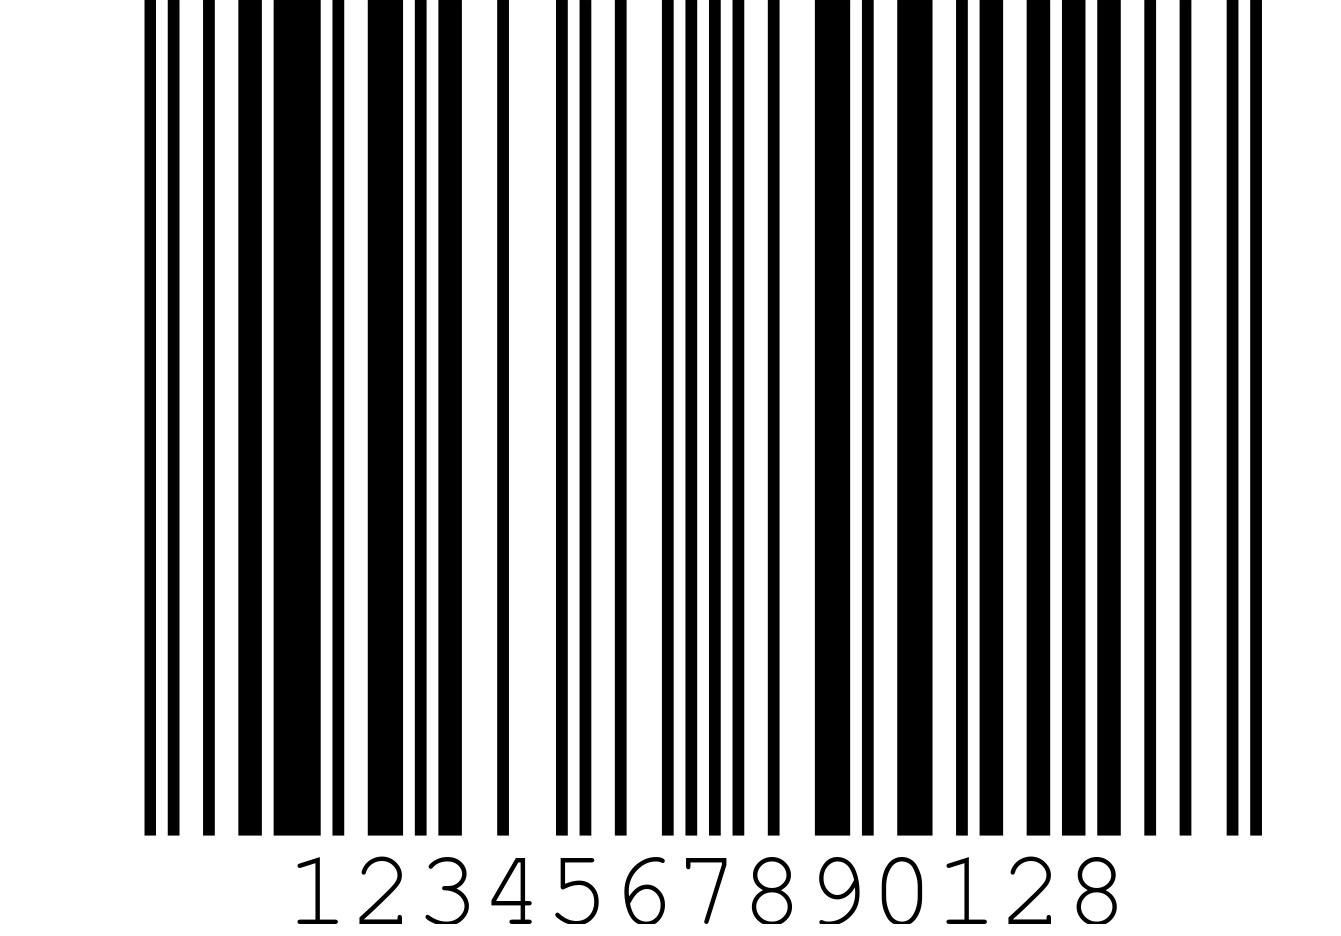 Étiquette de prix Original / Codes à Barres / ean-13 2